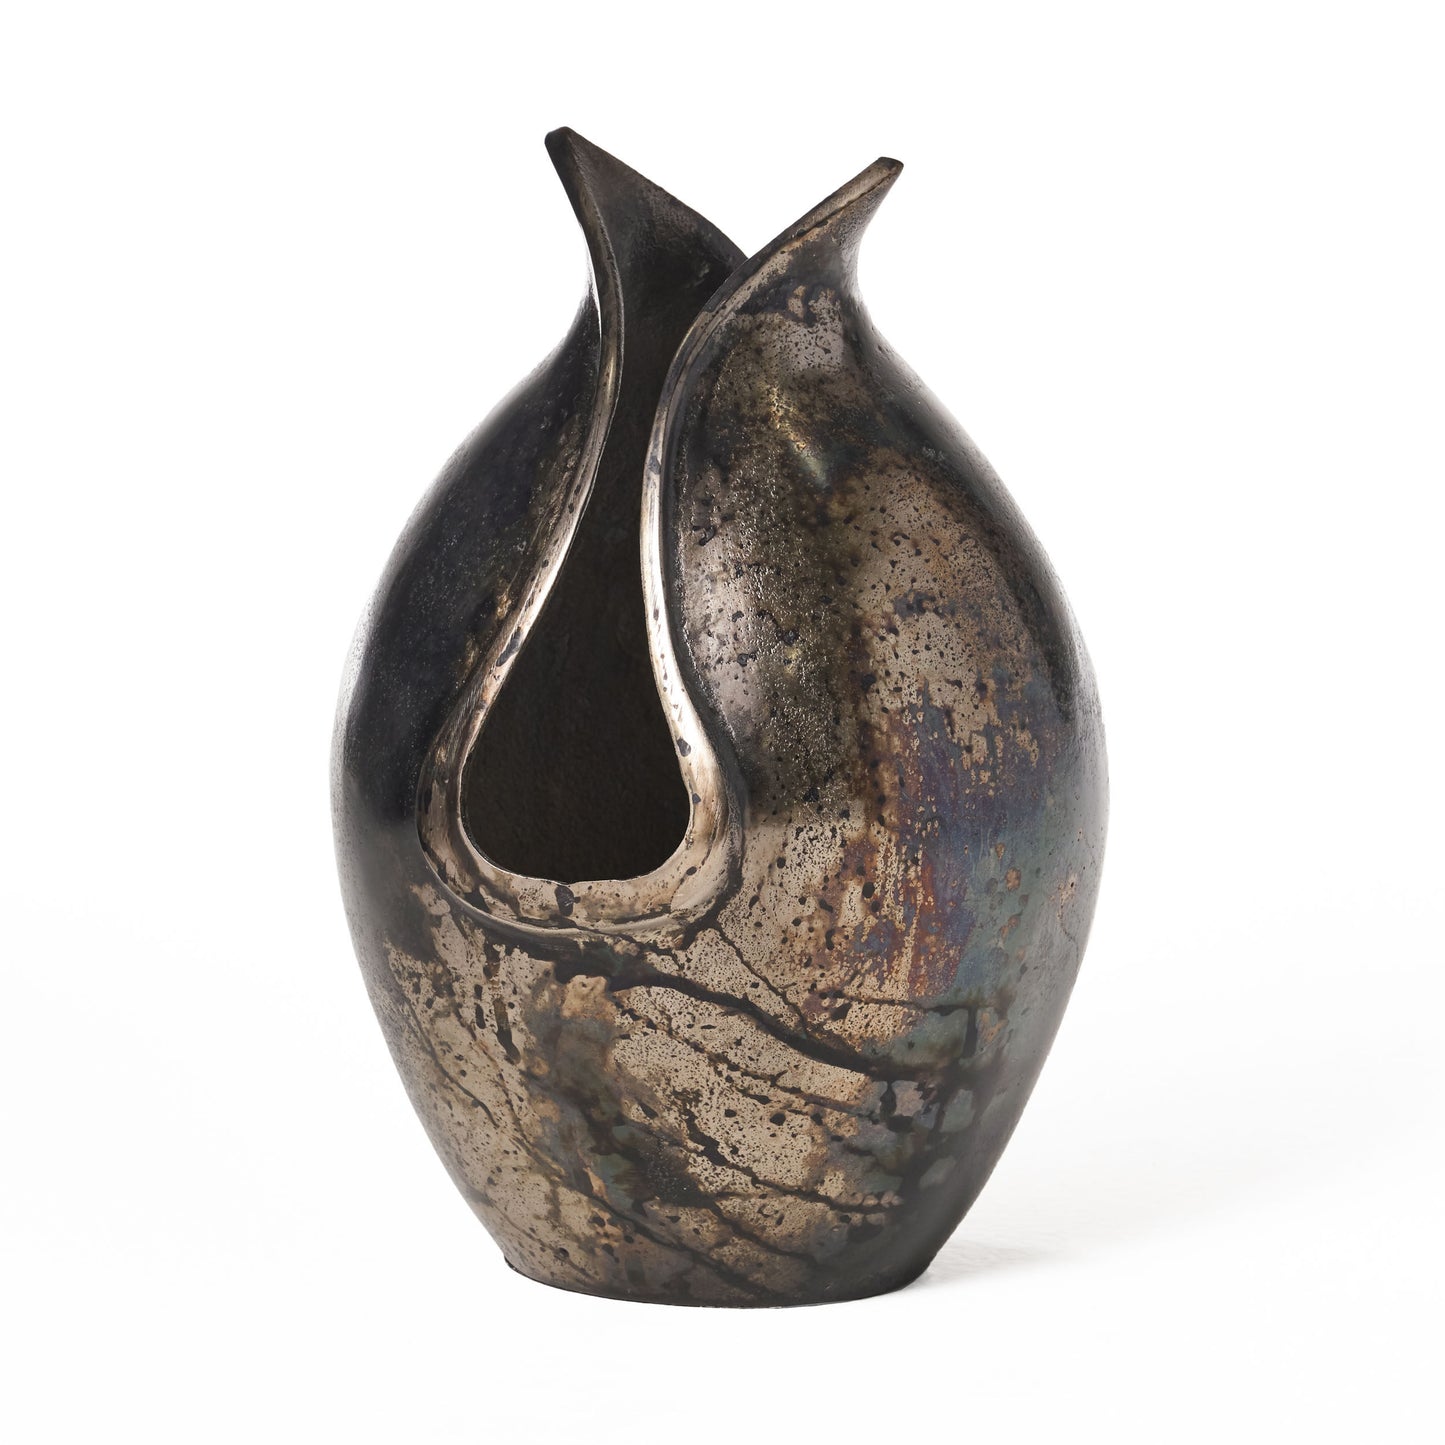 Thiago Handcrafted Aluminum Decorative Vase, Charcoal